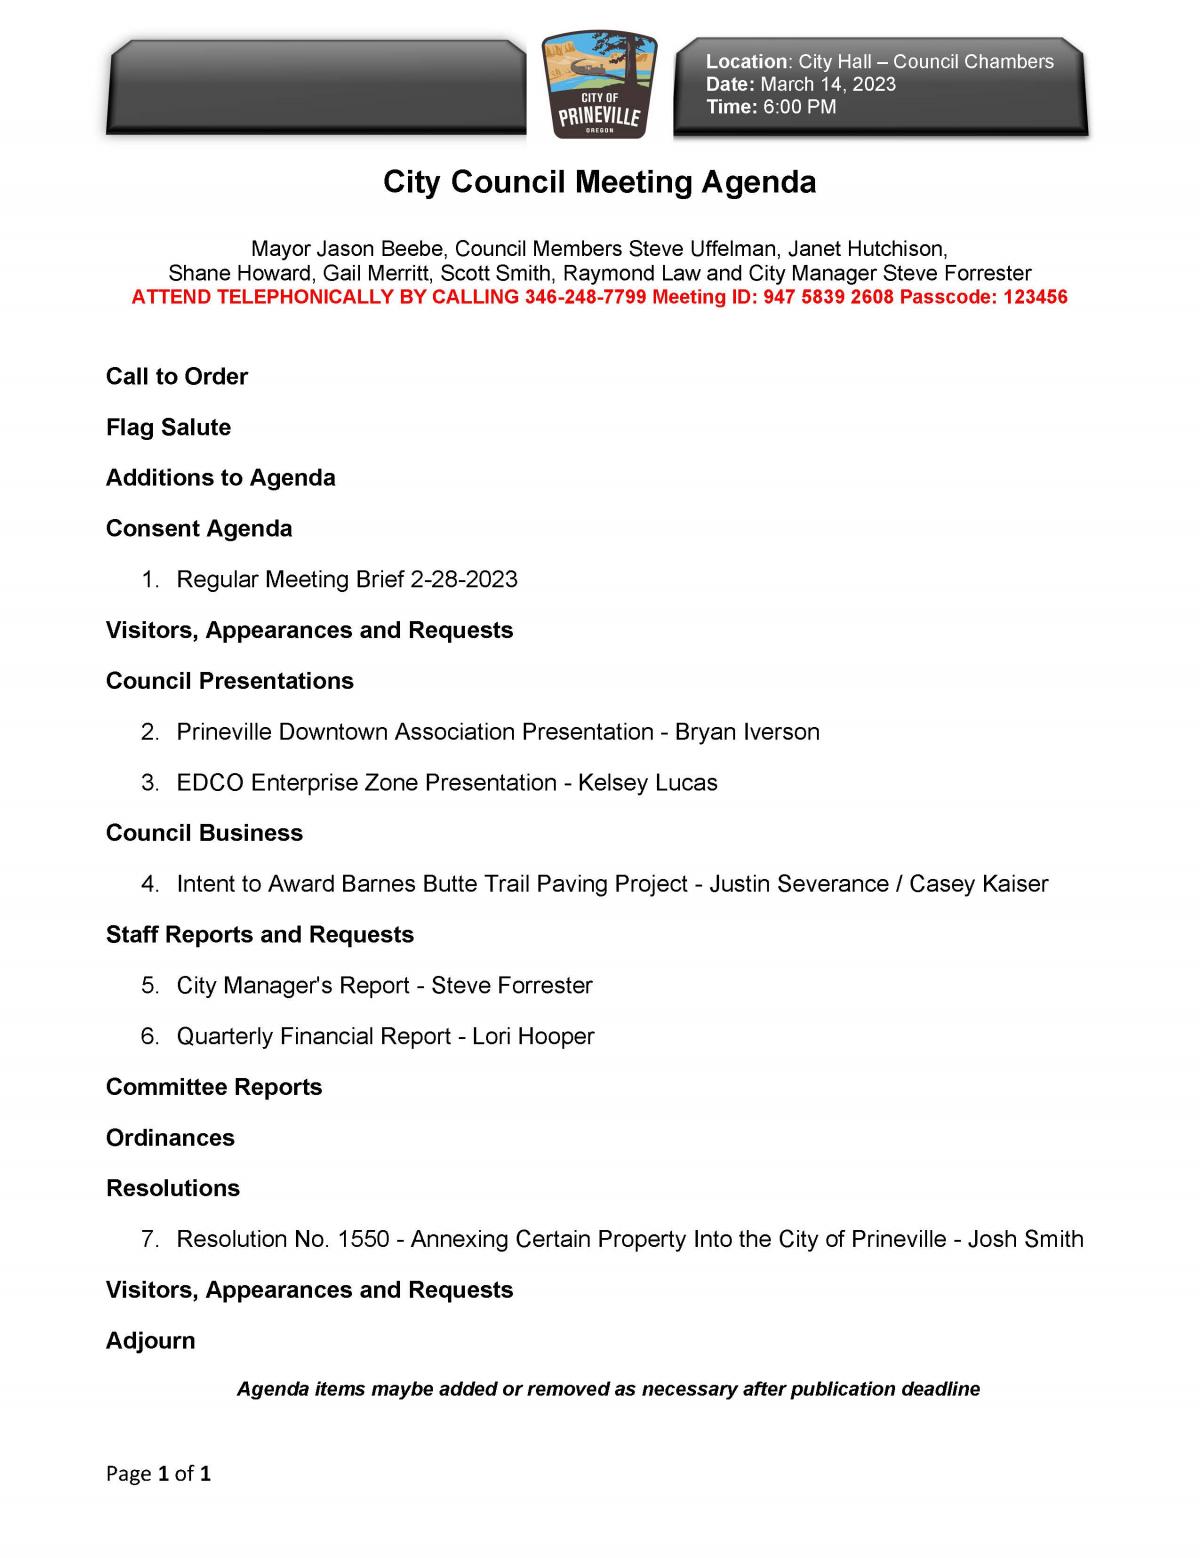 Council Agenda 3-14-2023